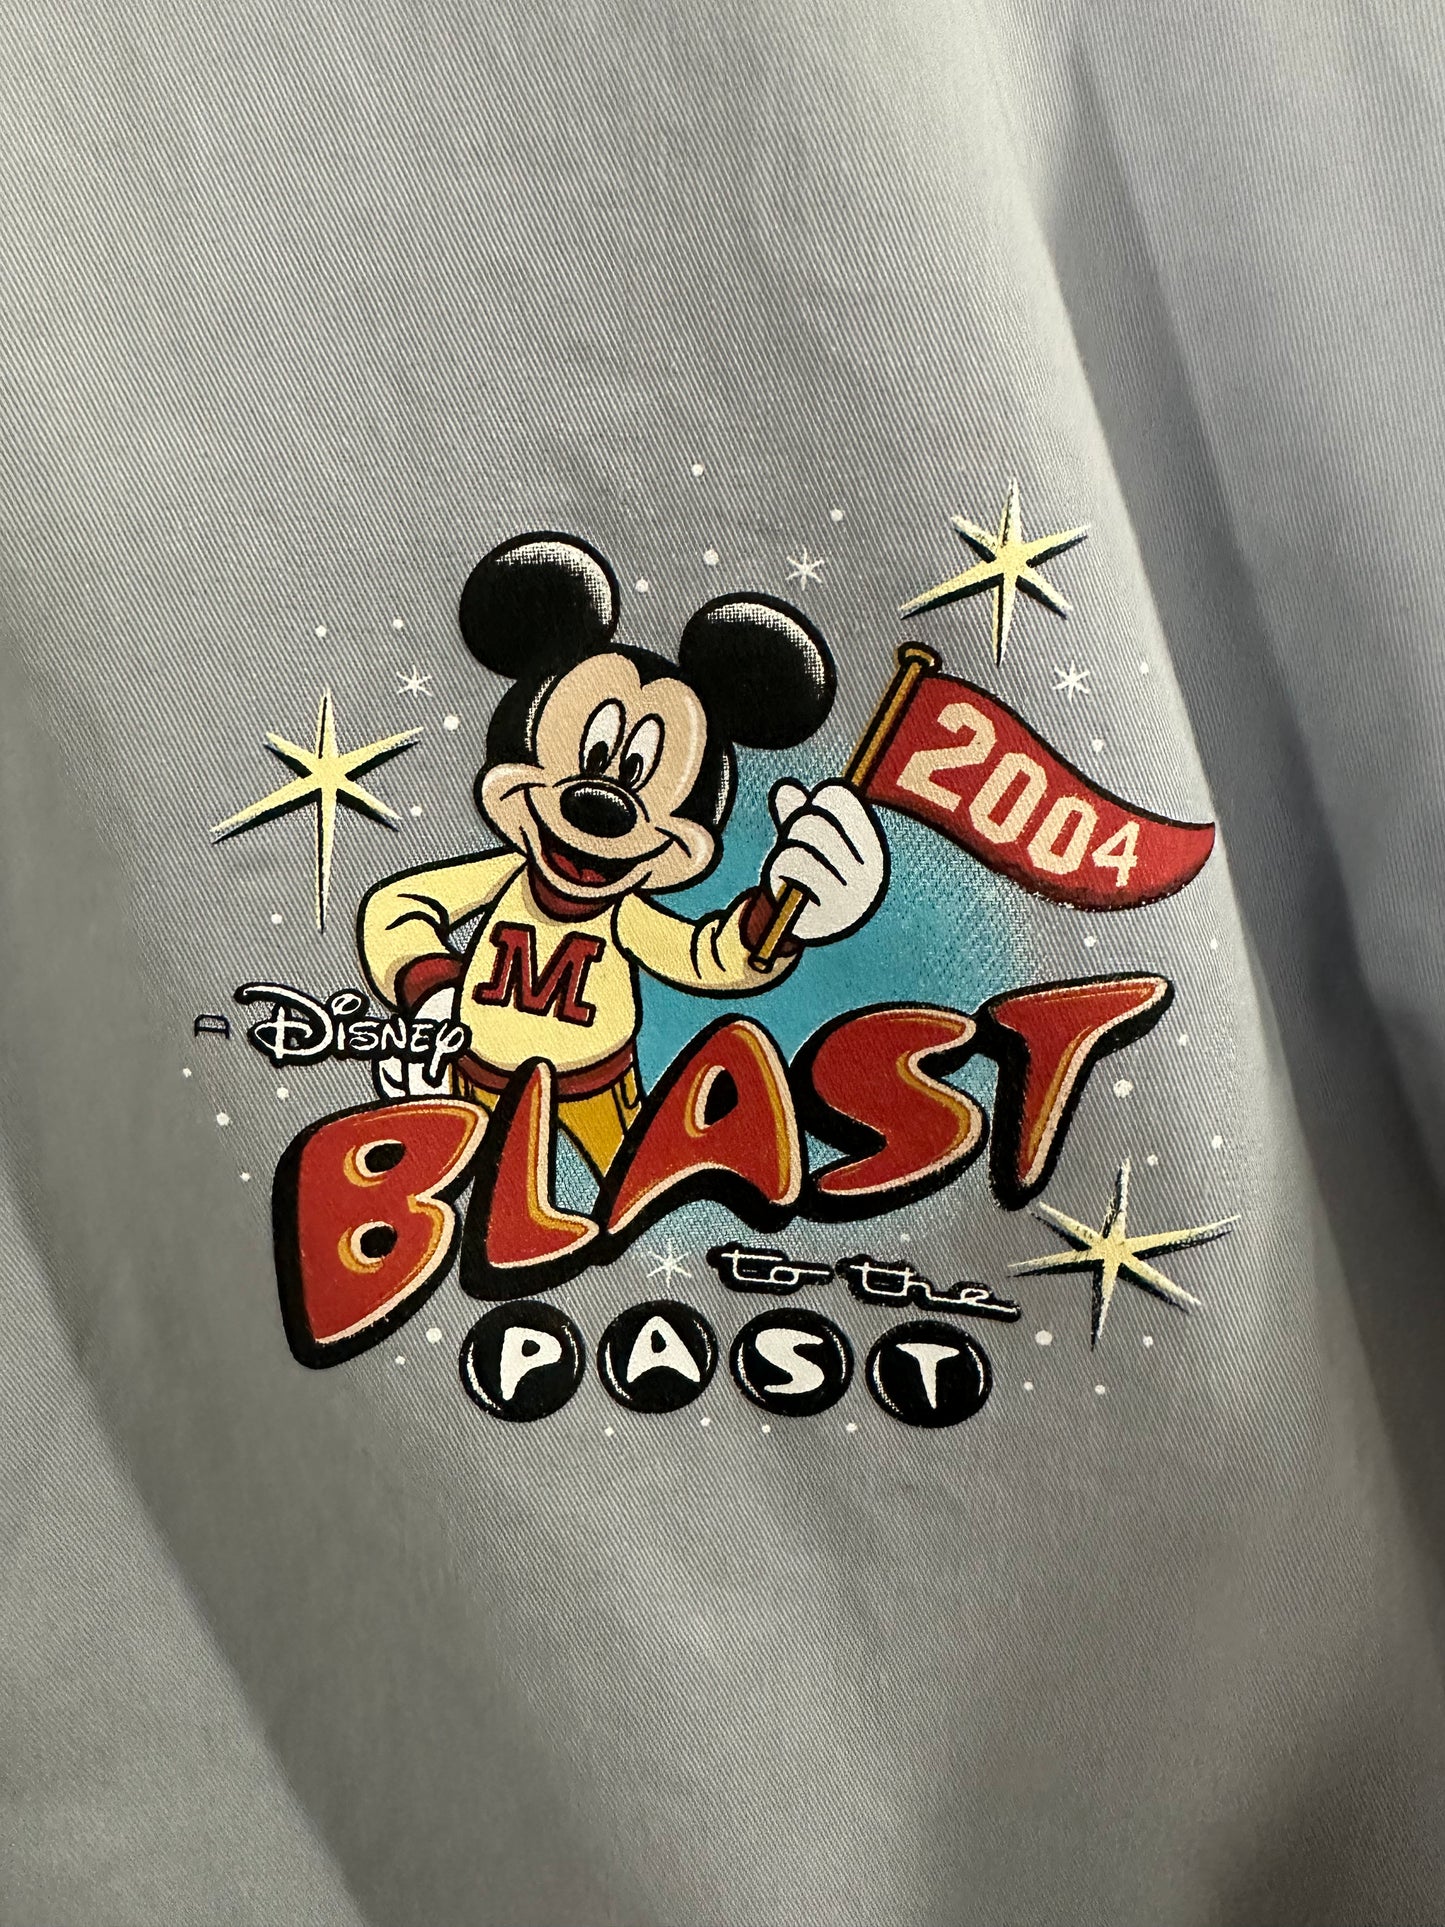 2004 Vintage Disney collard shirt